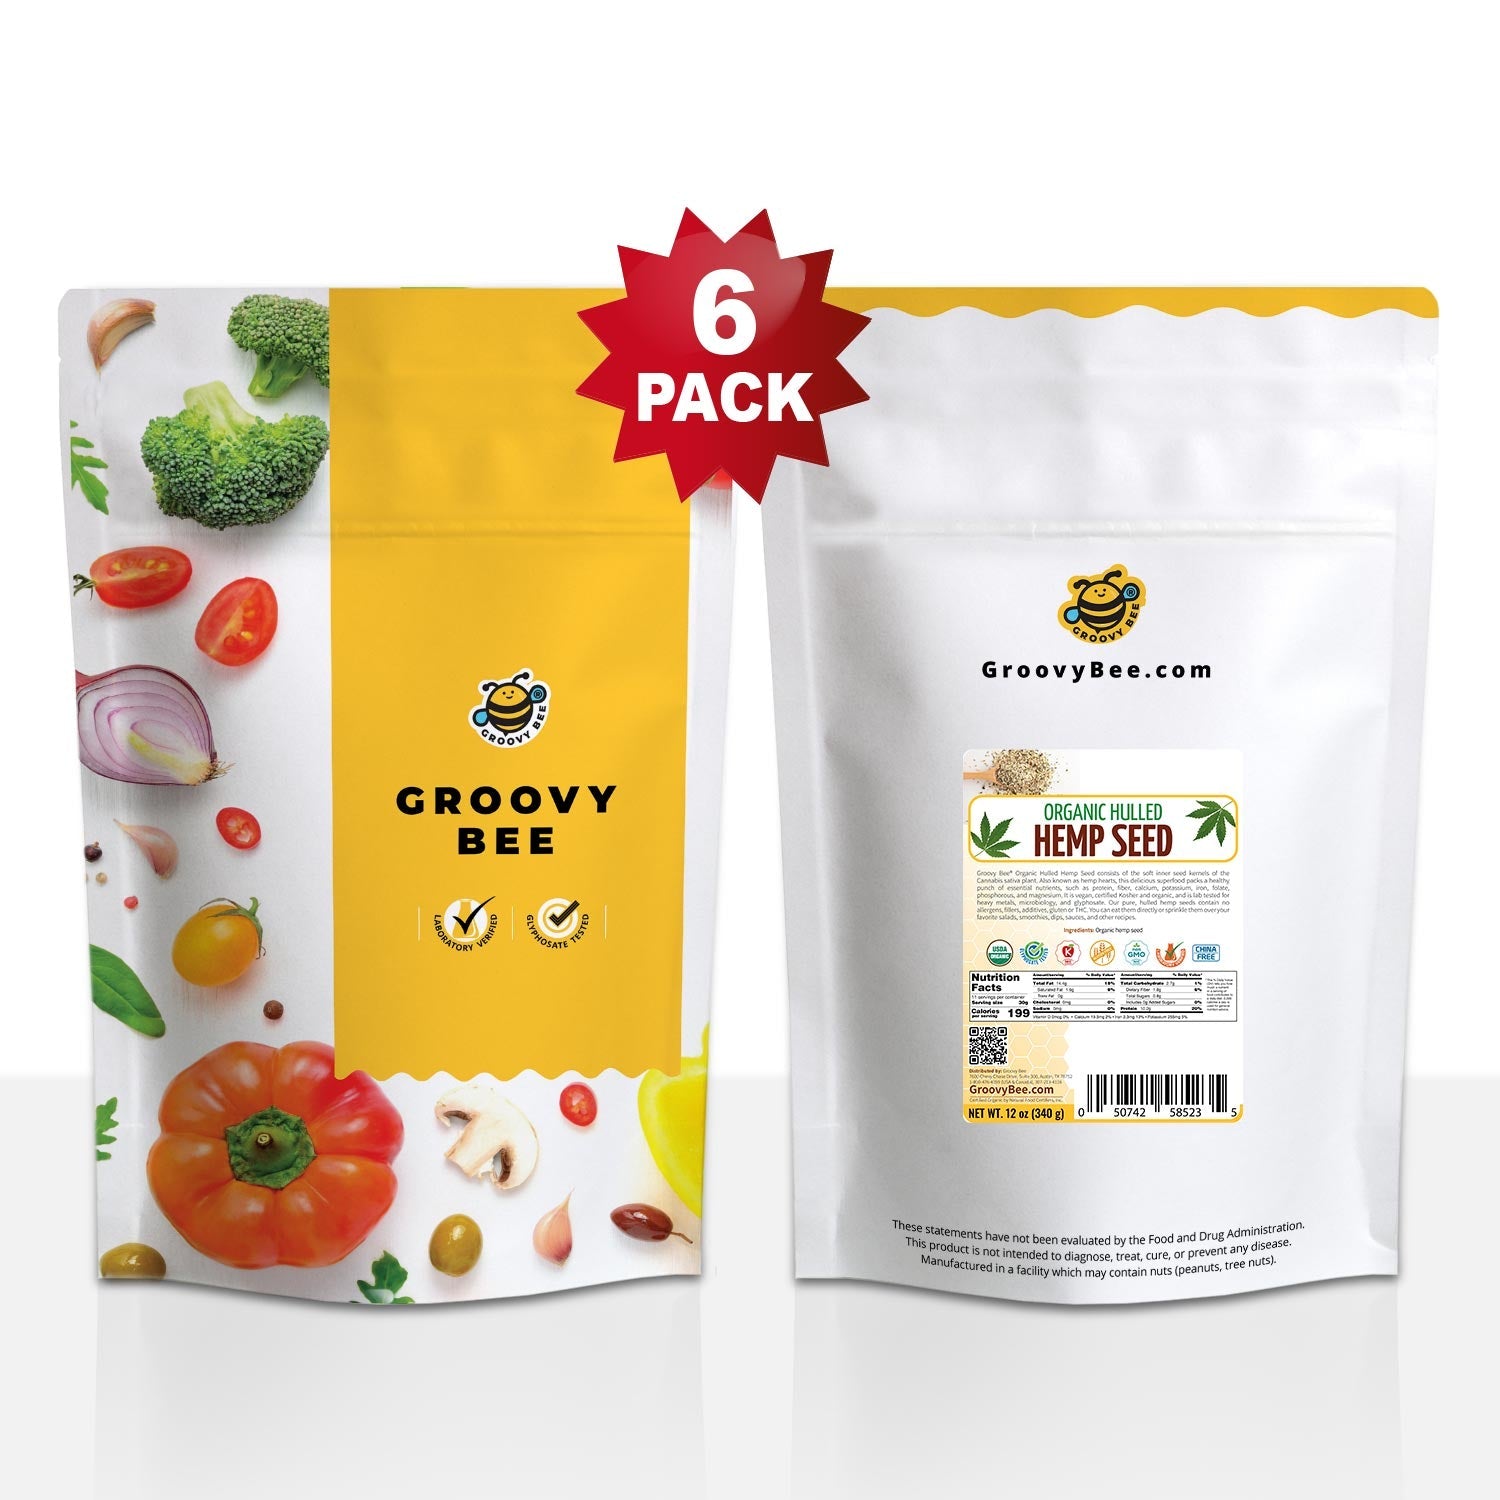 Organic Hulled Hemp Seed 12 oz (340 g) (6-Pack)